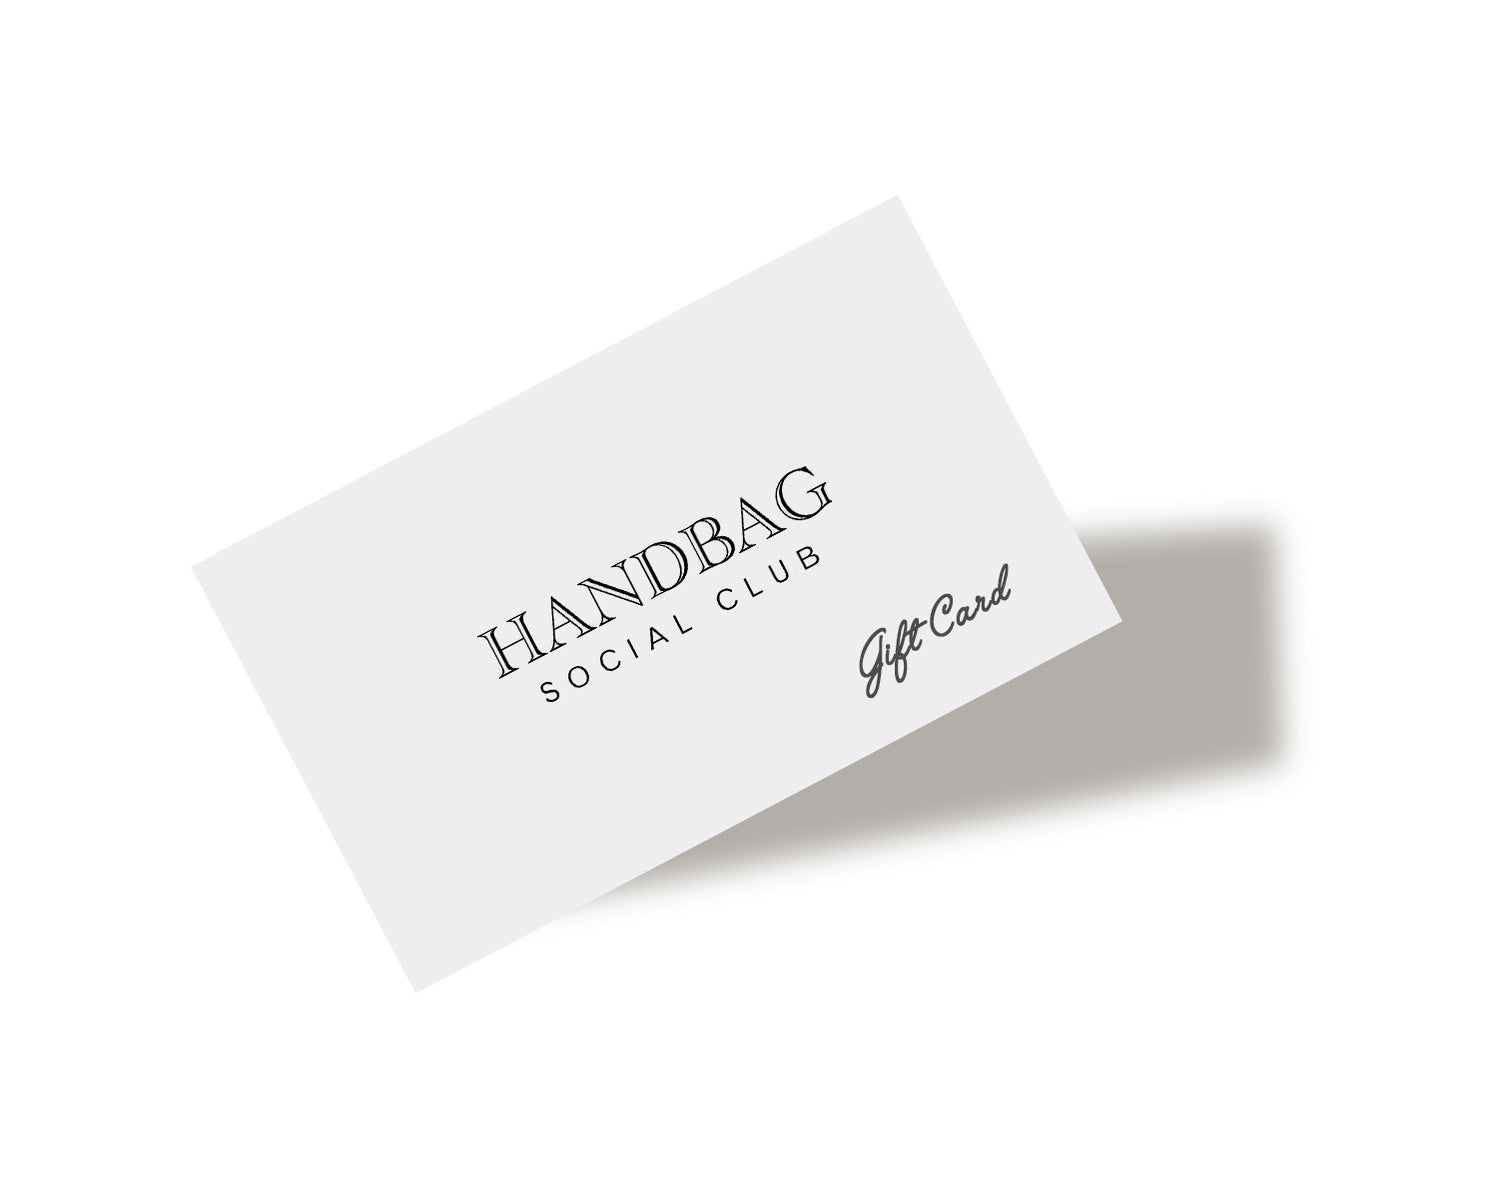 Handbag Social Club Digital Gift Card